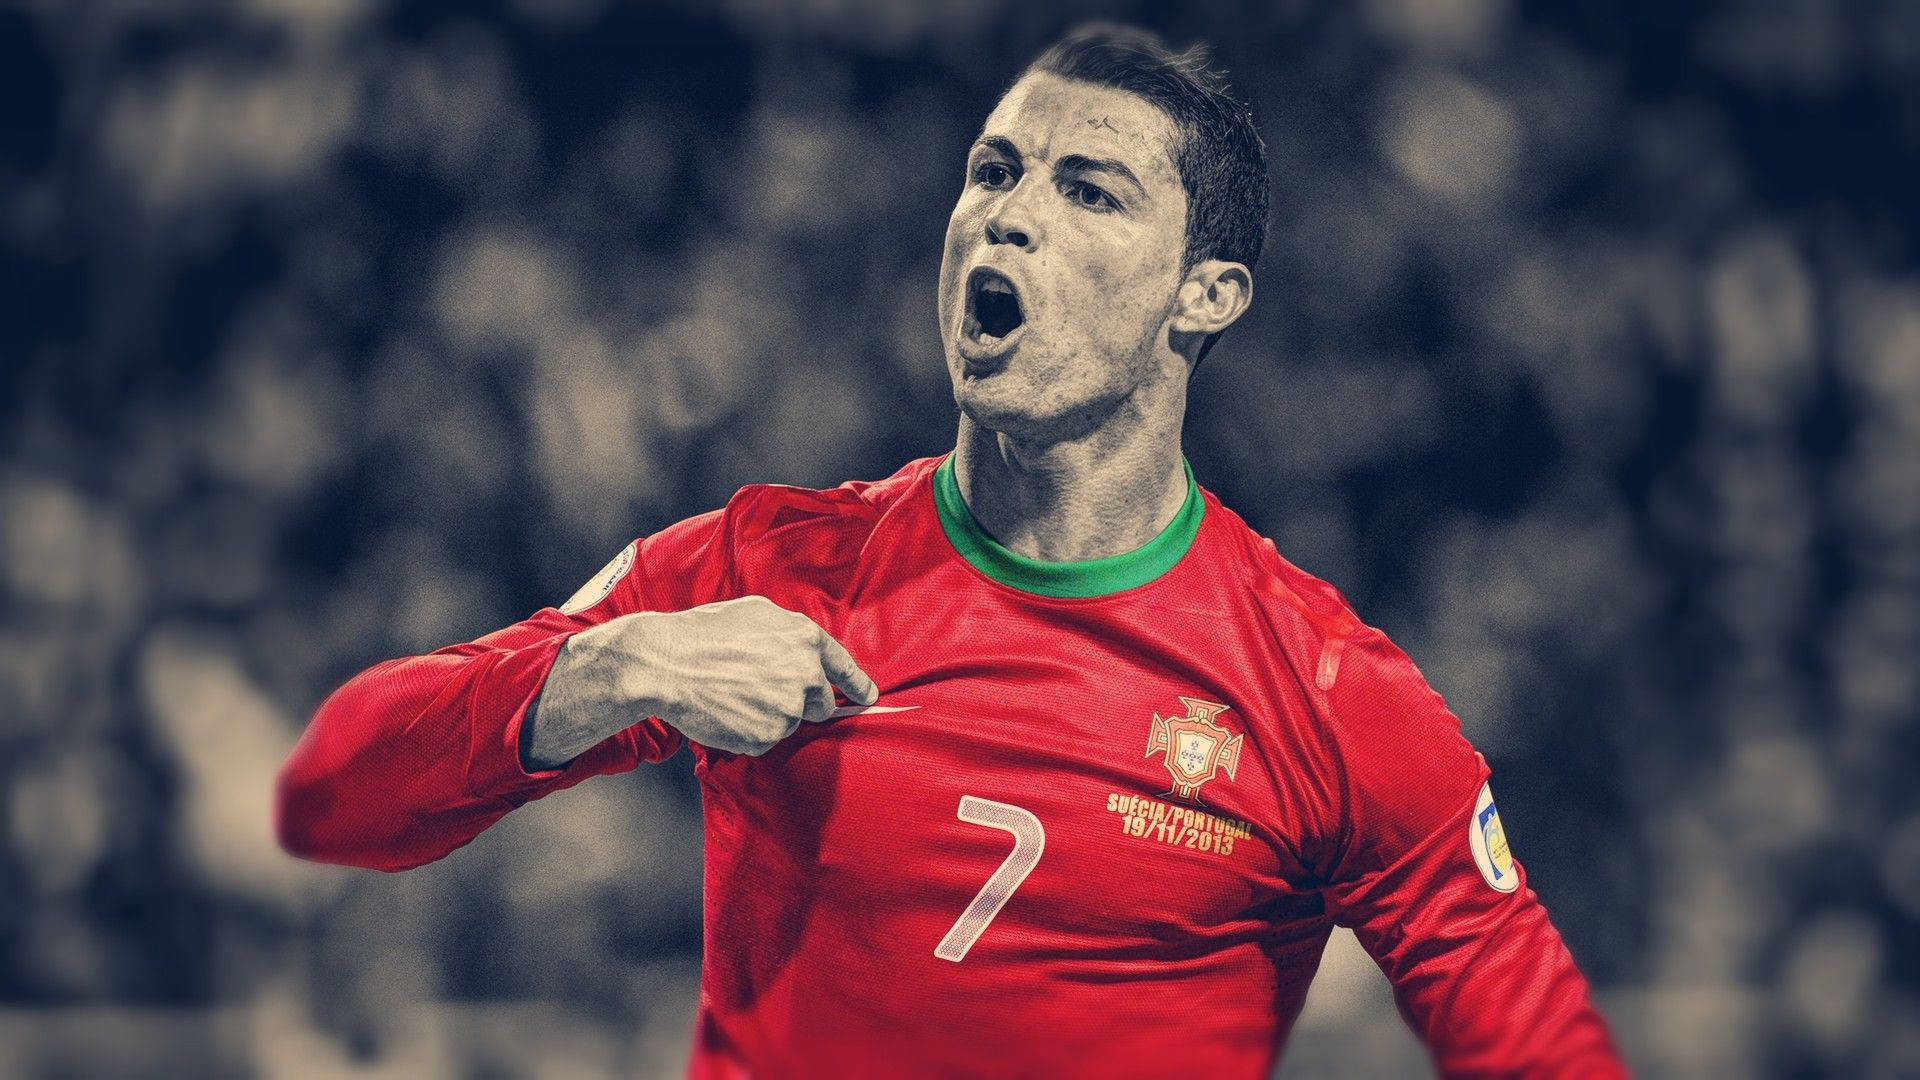 Cristiano Ronaldo Cool Portugal Fodboldspiller Wallpaper